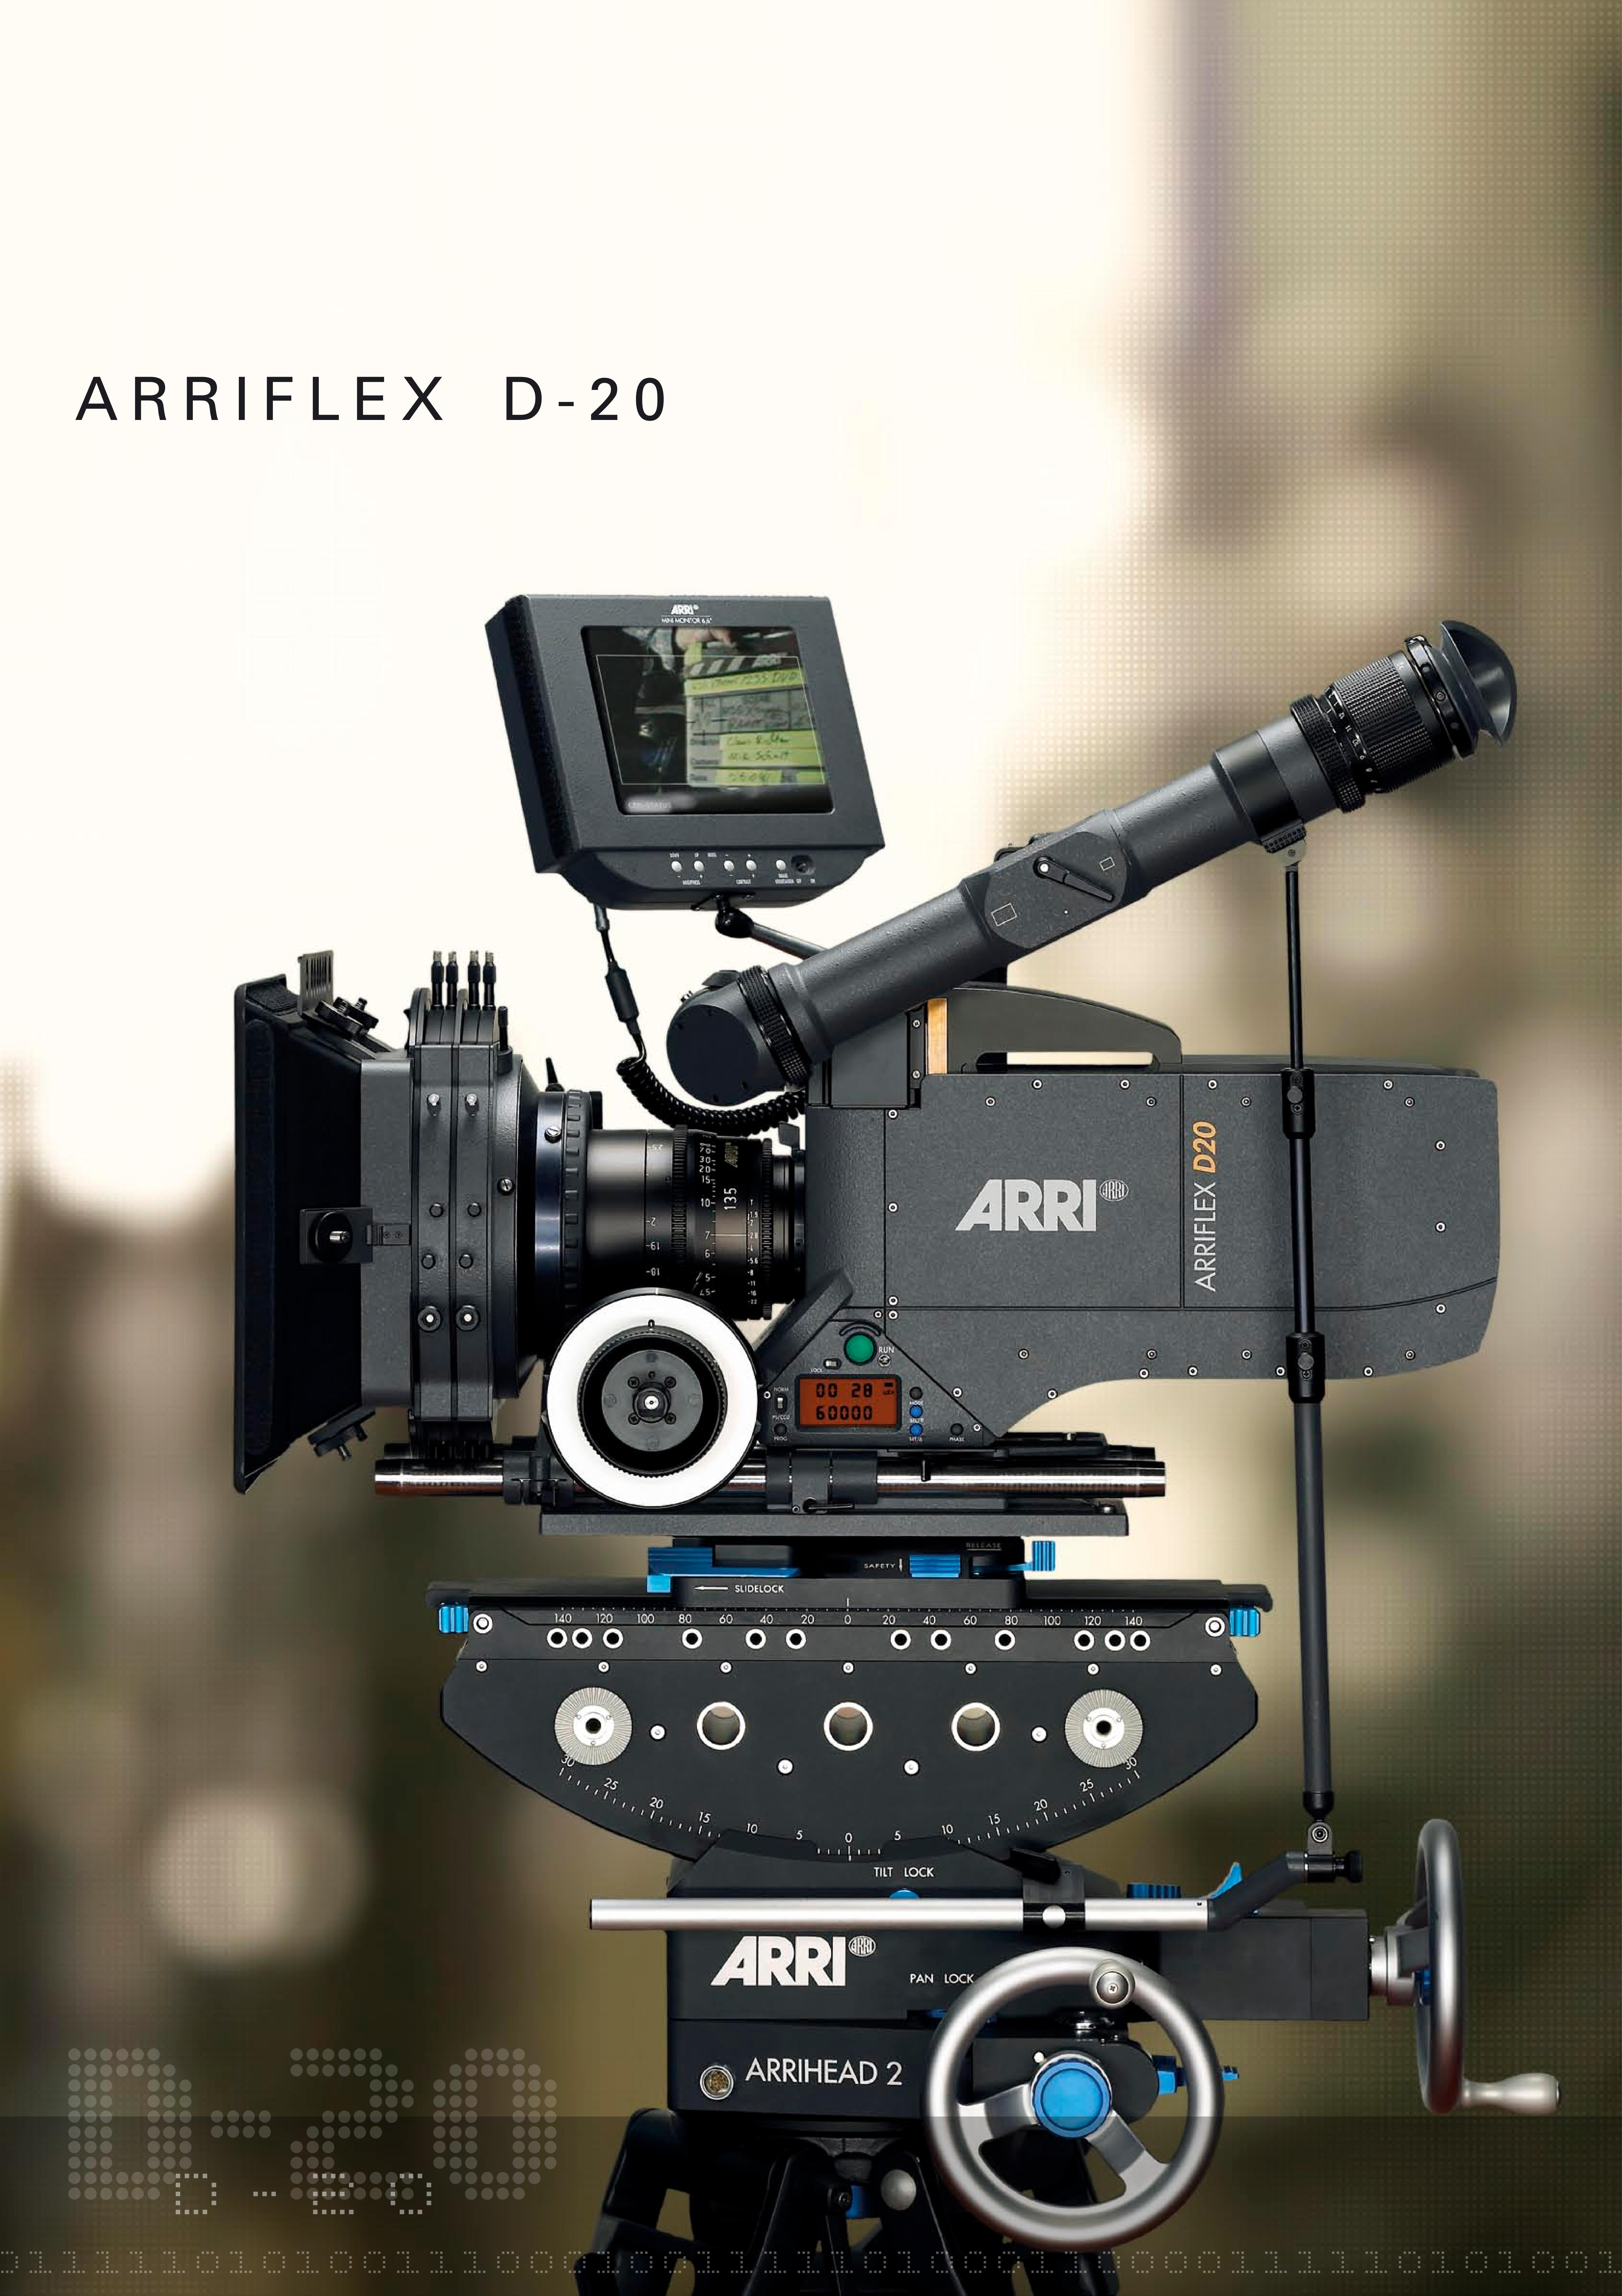 ARRI D-20 Digital Camera User Manual